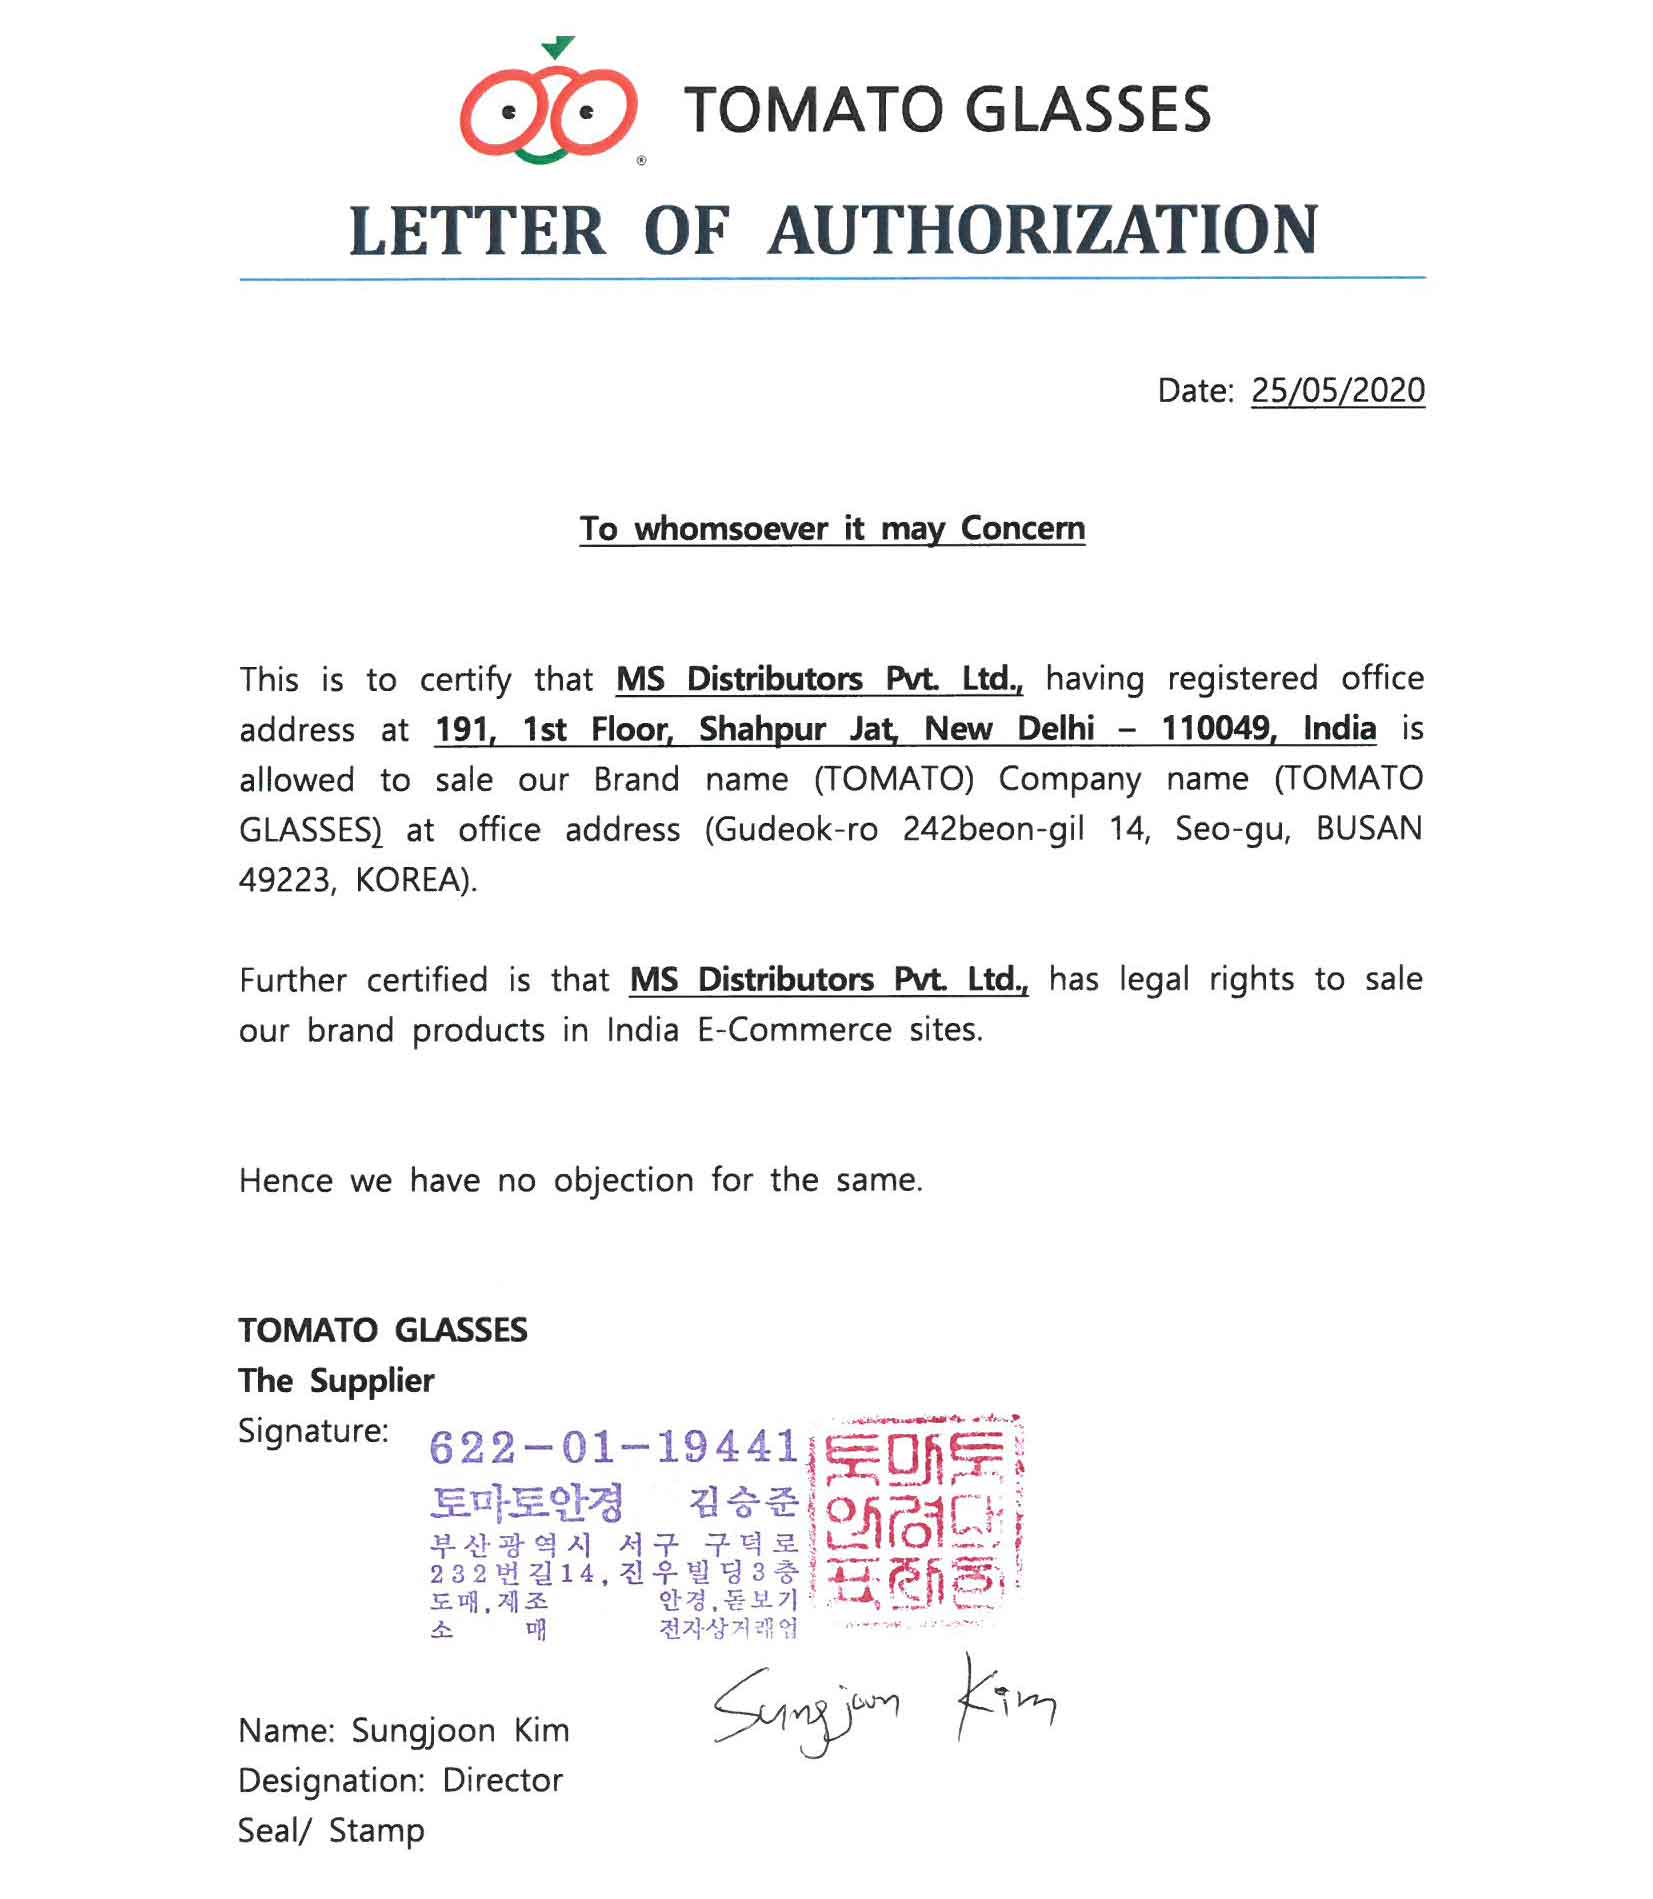 authorization-letter